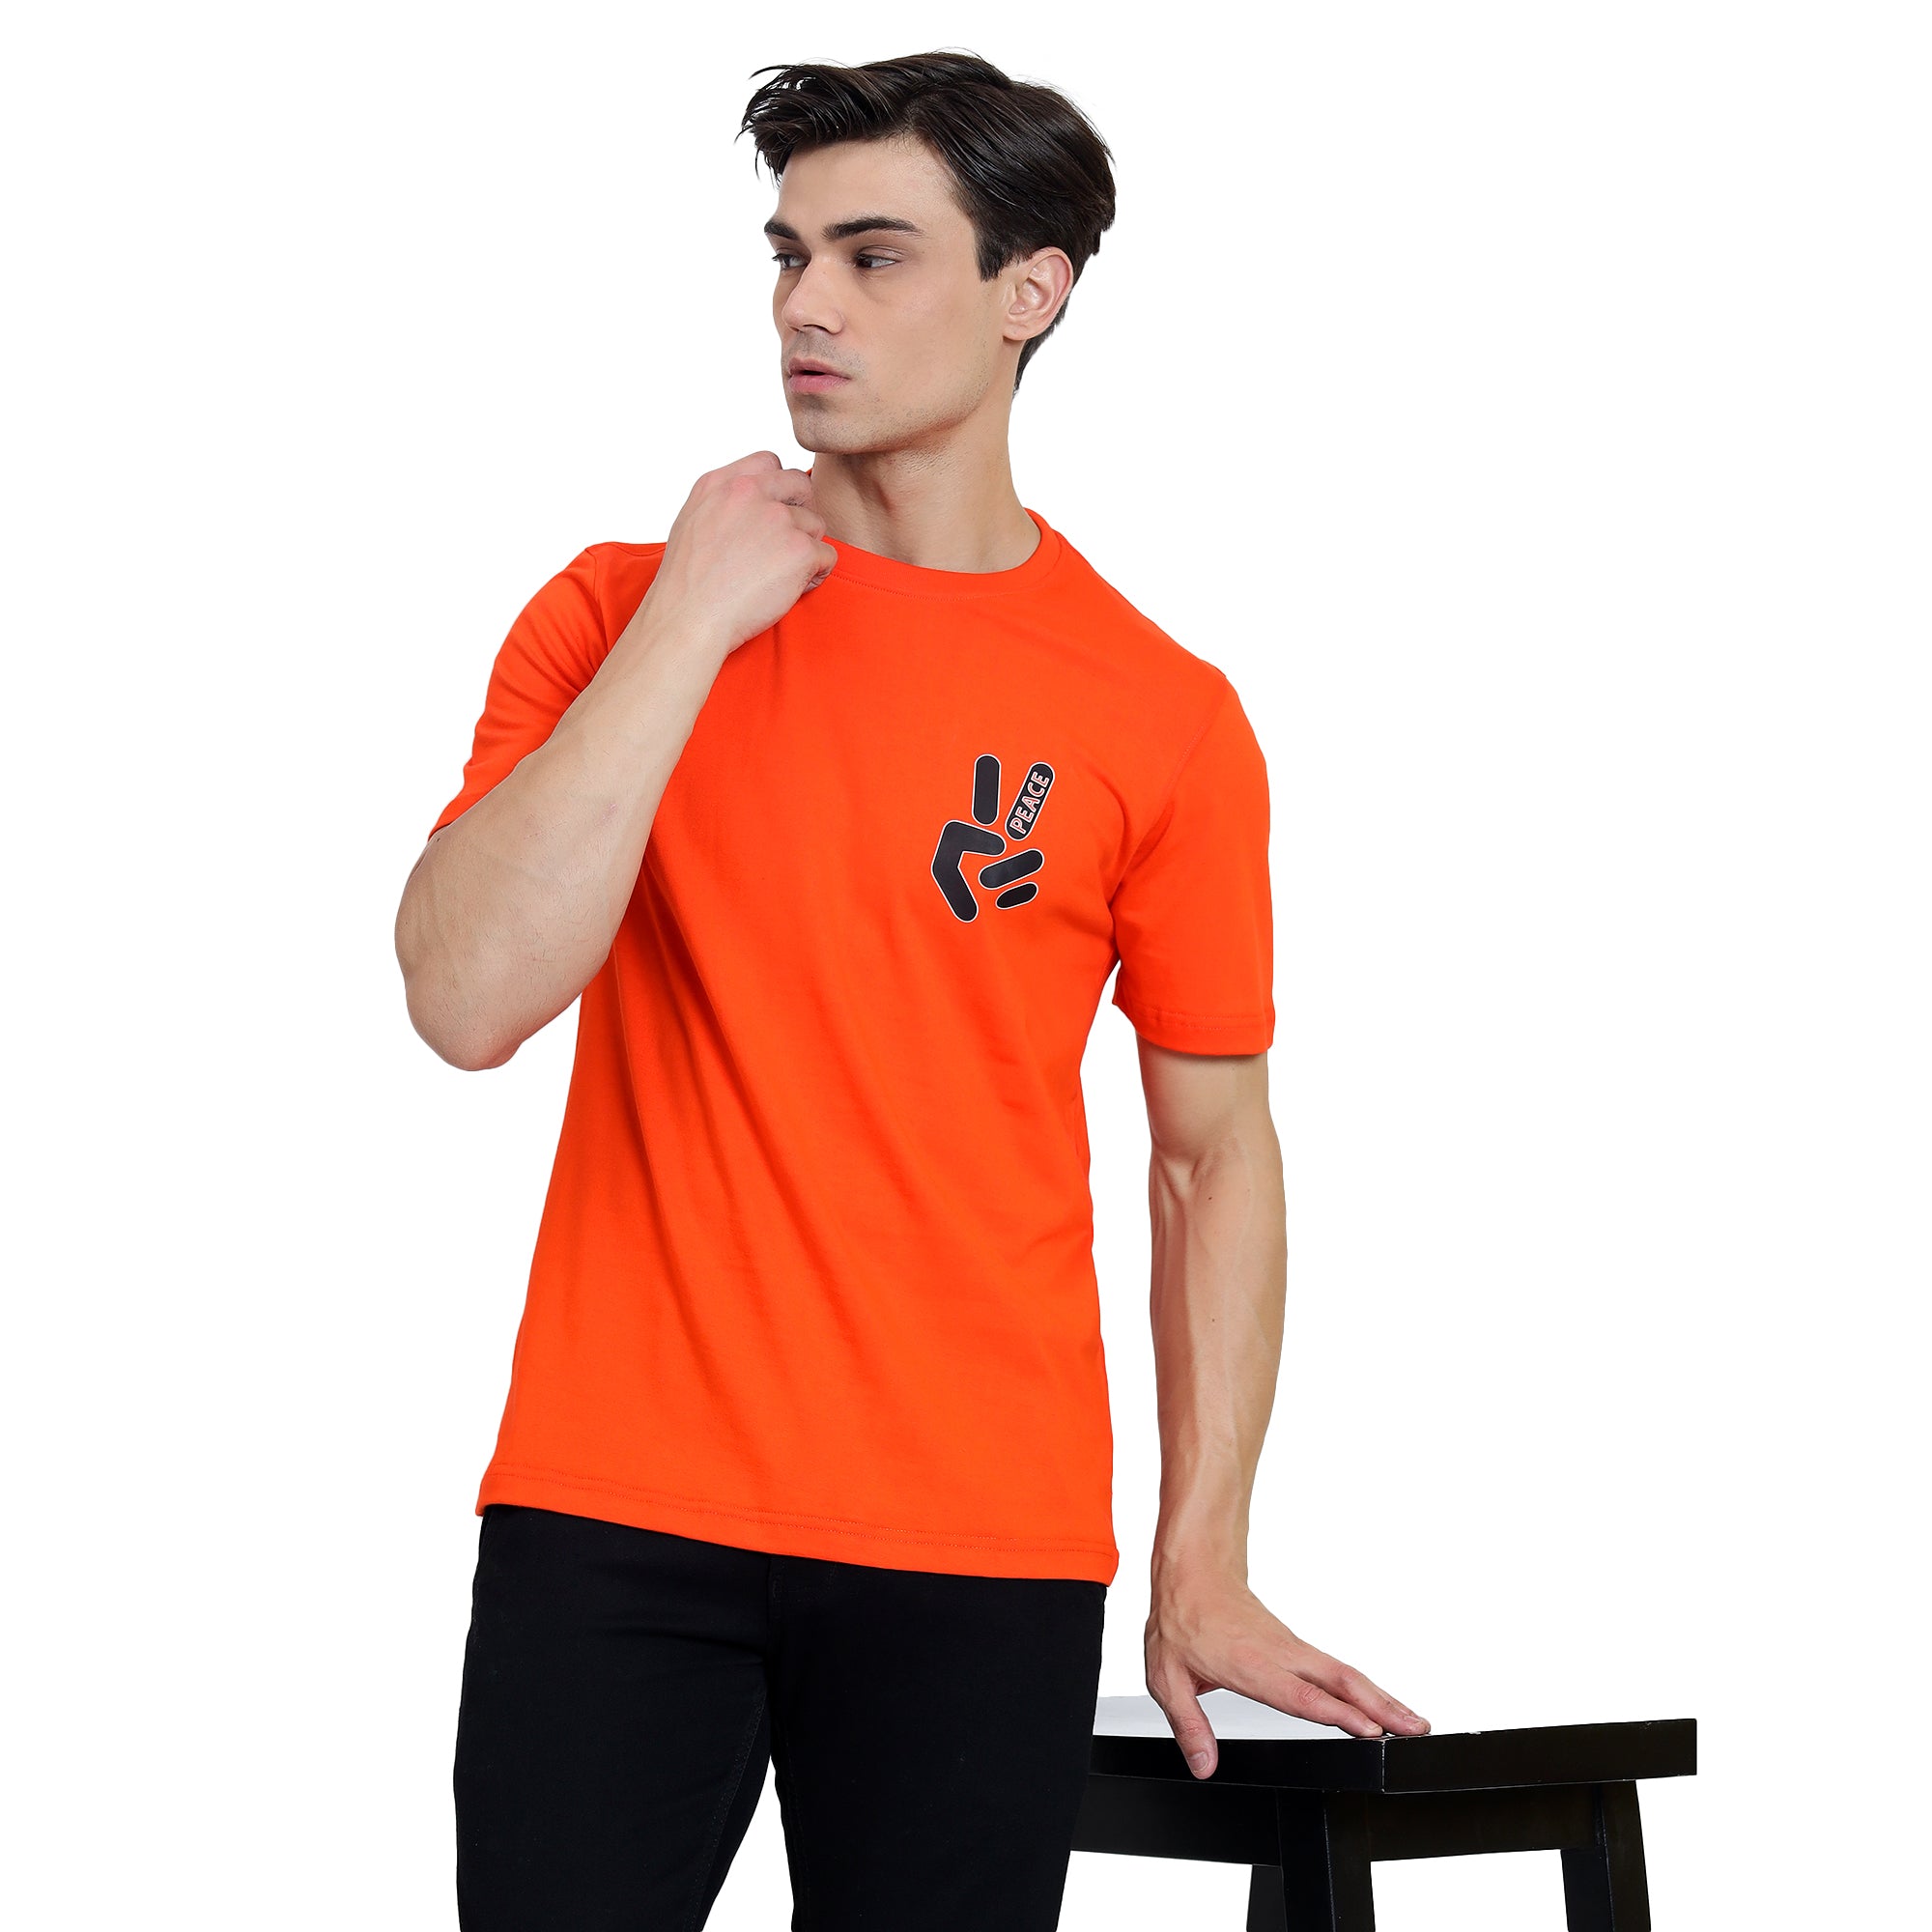 Mentoos Men's Orange Cotton Printed Round Neck Half Sleeves T-Shirt